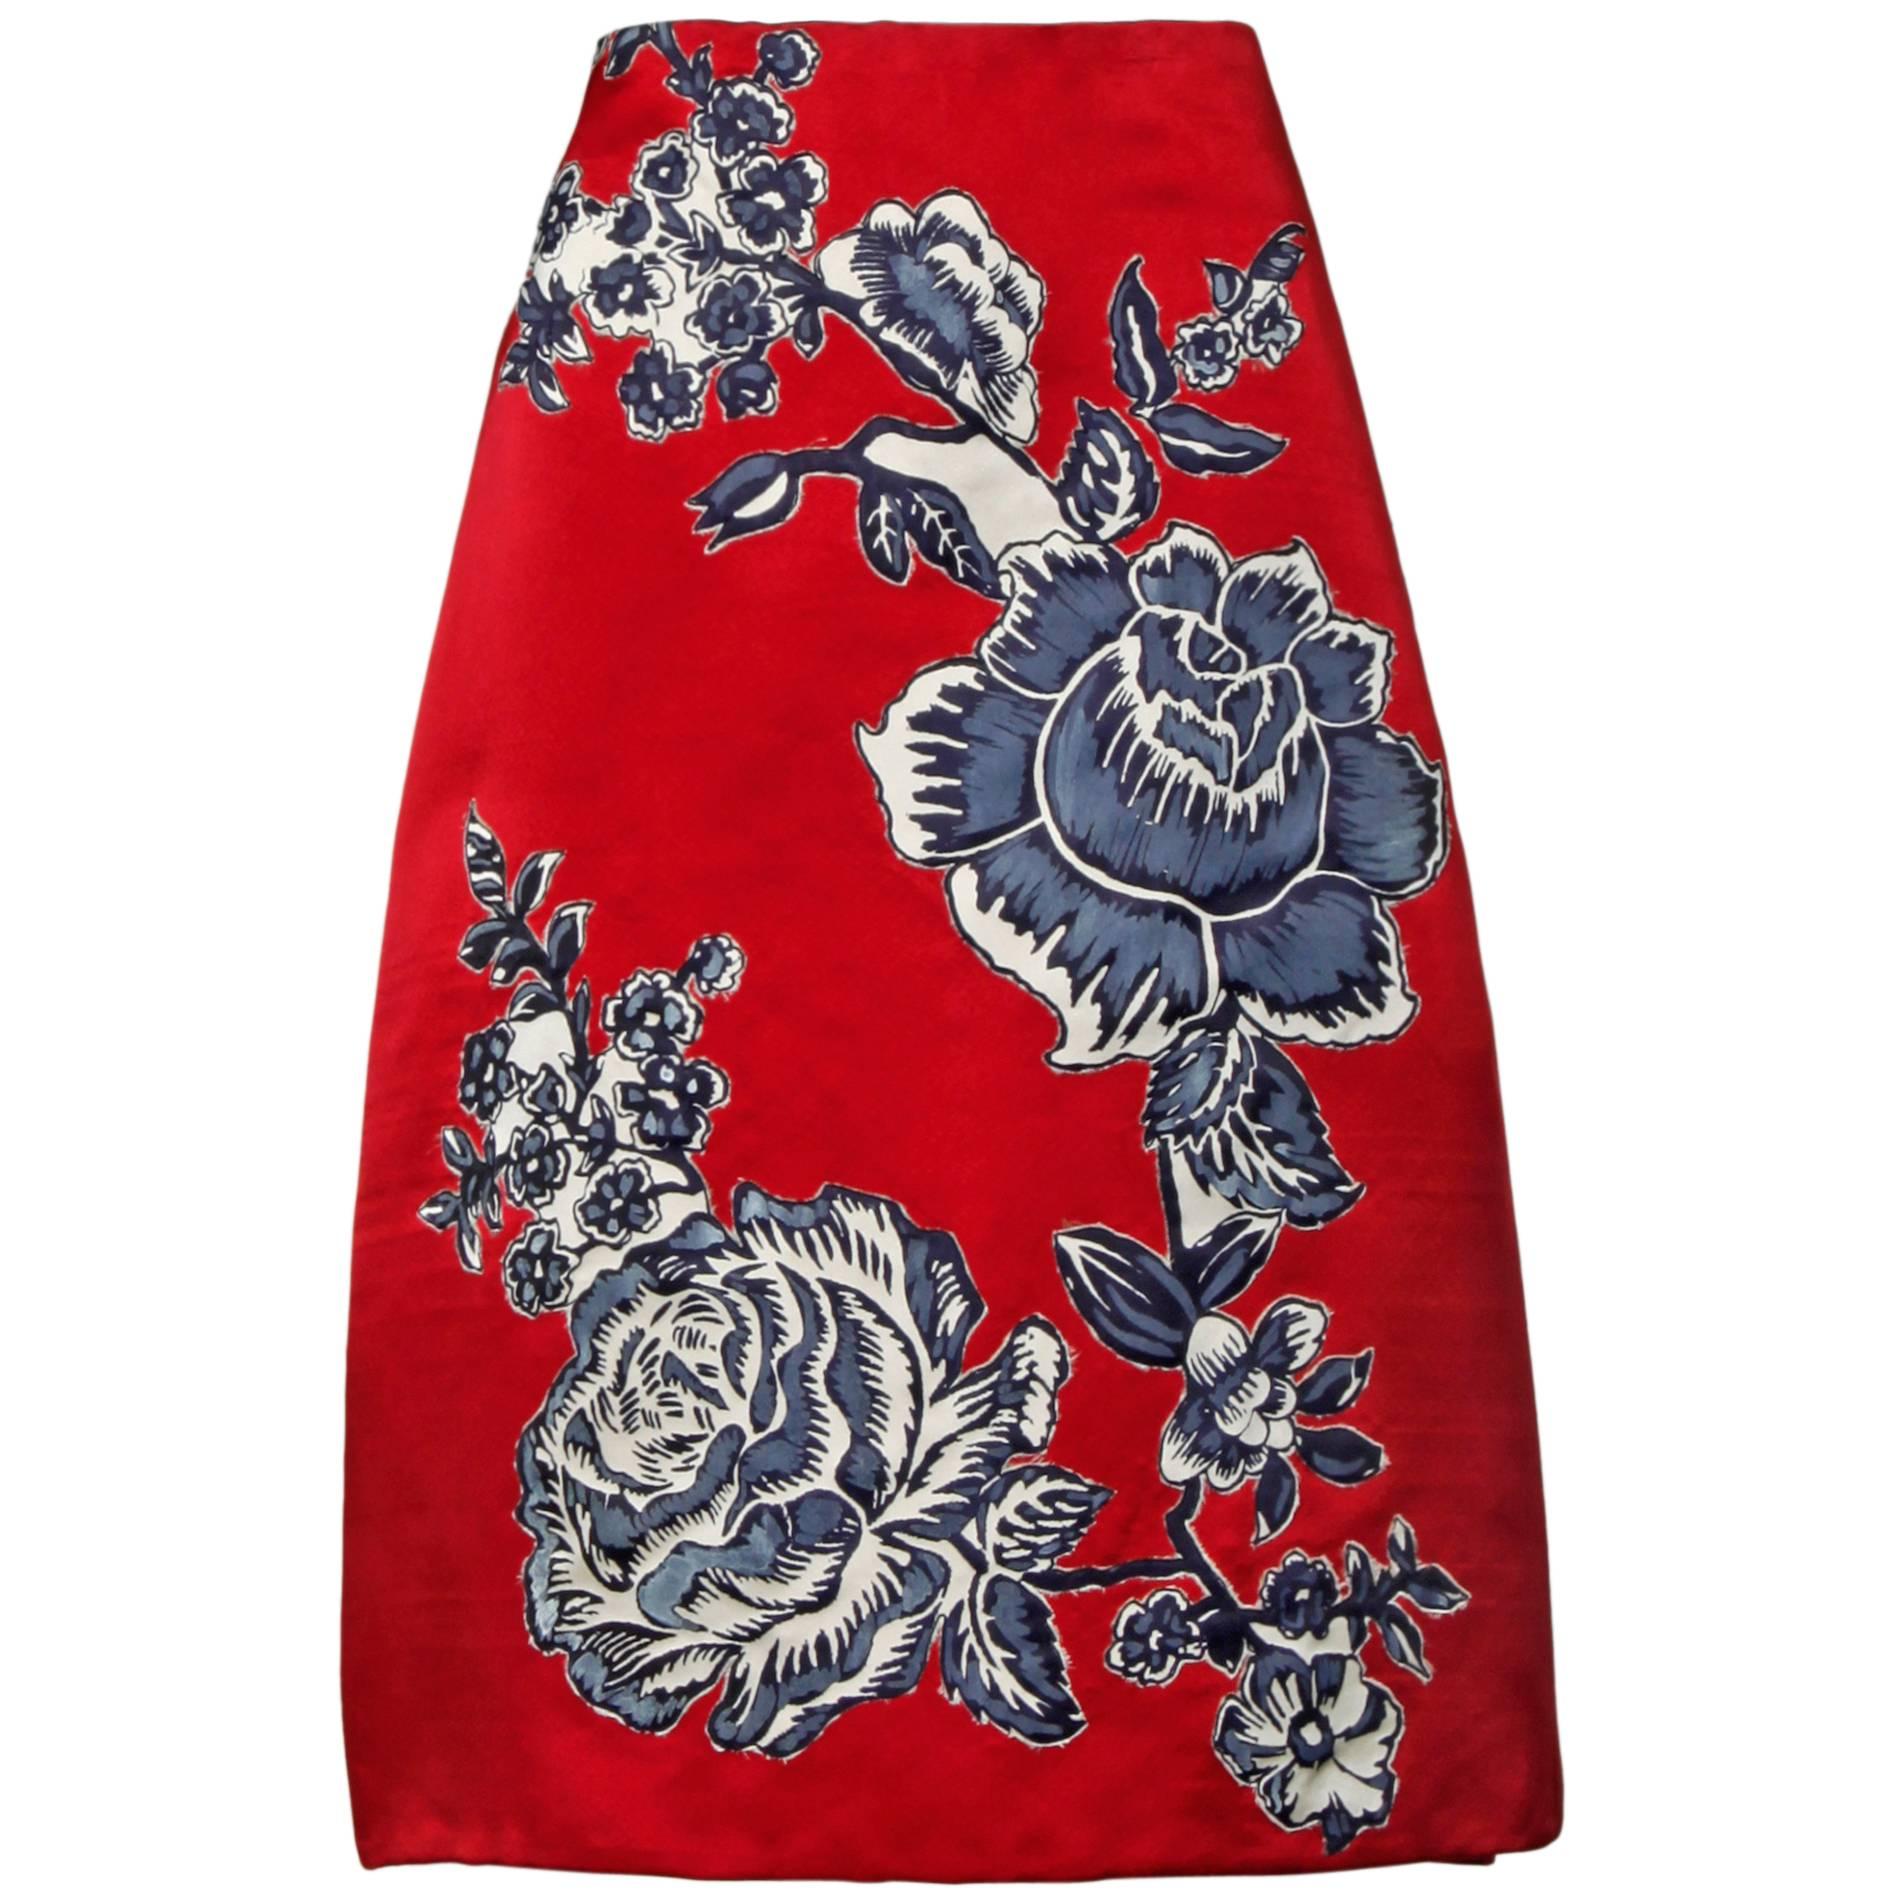 Bill Blass Vintage Red Silk Satin Skirt with Screen Printed Flowers